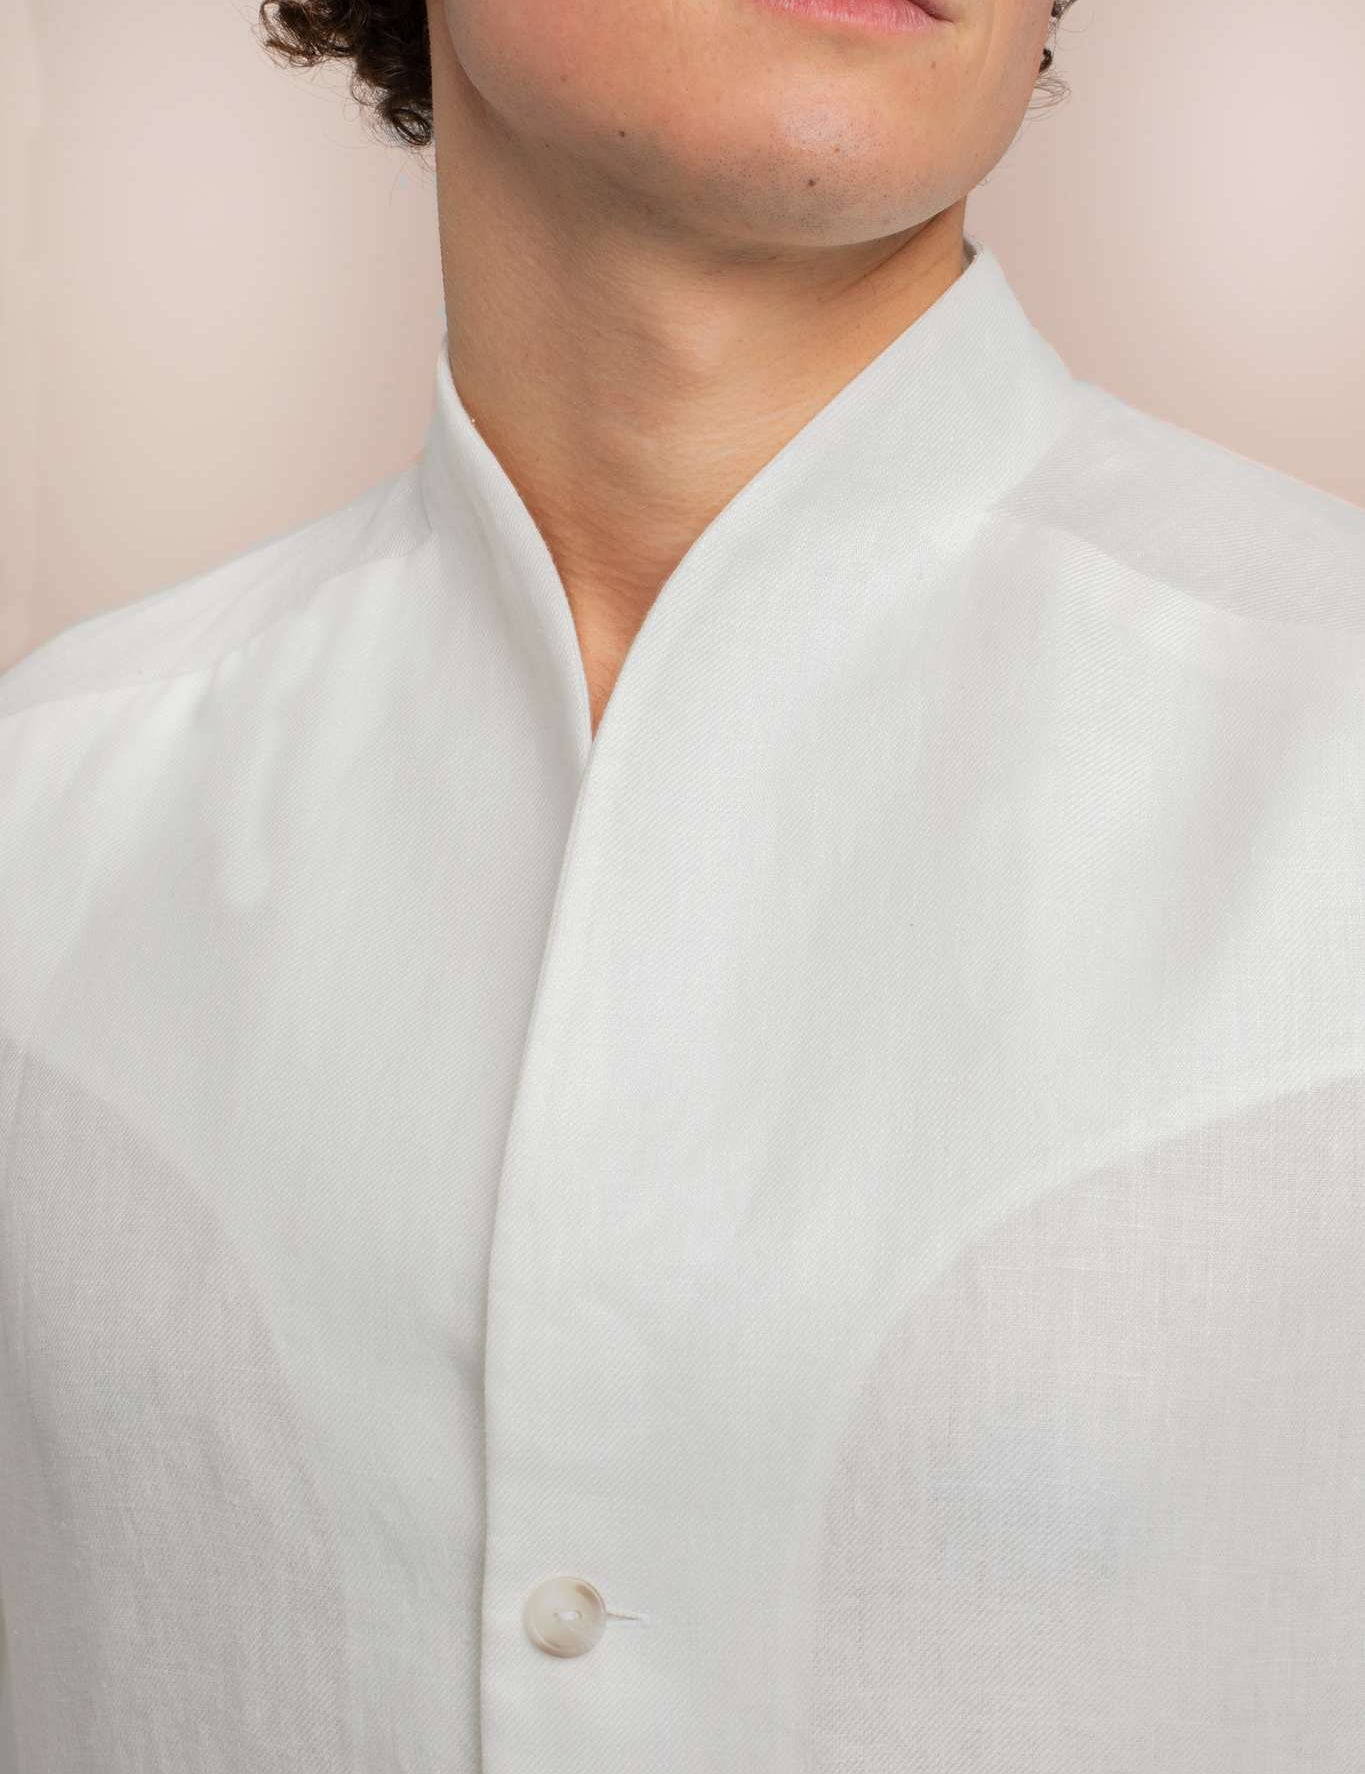 mens-white-luxury-linen-jacket-collar-details_9ccc523e-83a5-4352-b9ef-2ec6789afd3c.jpg